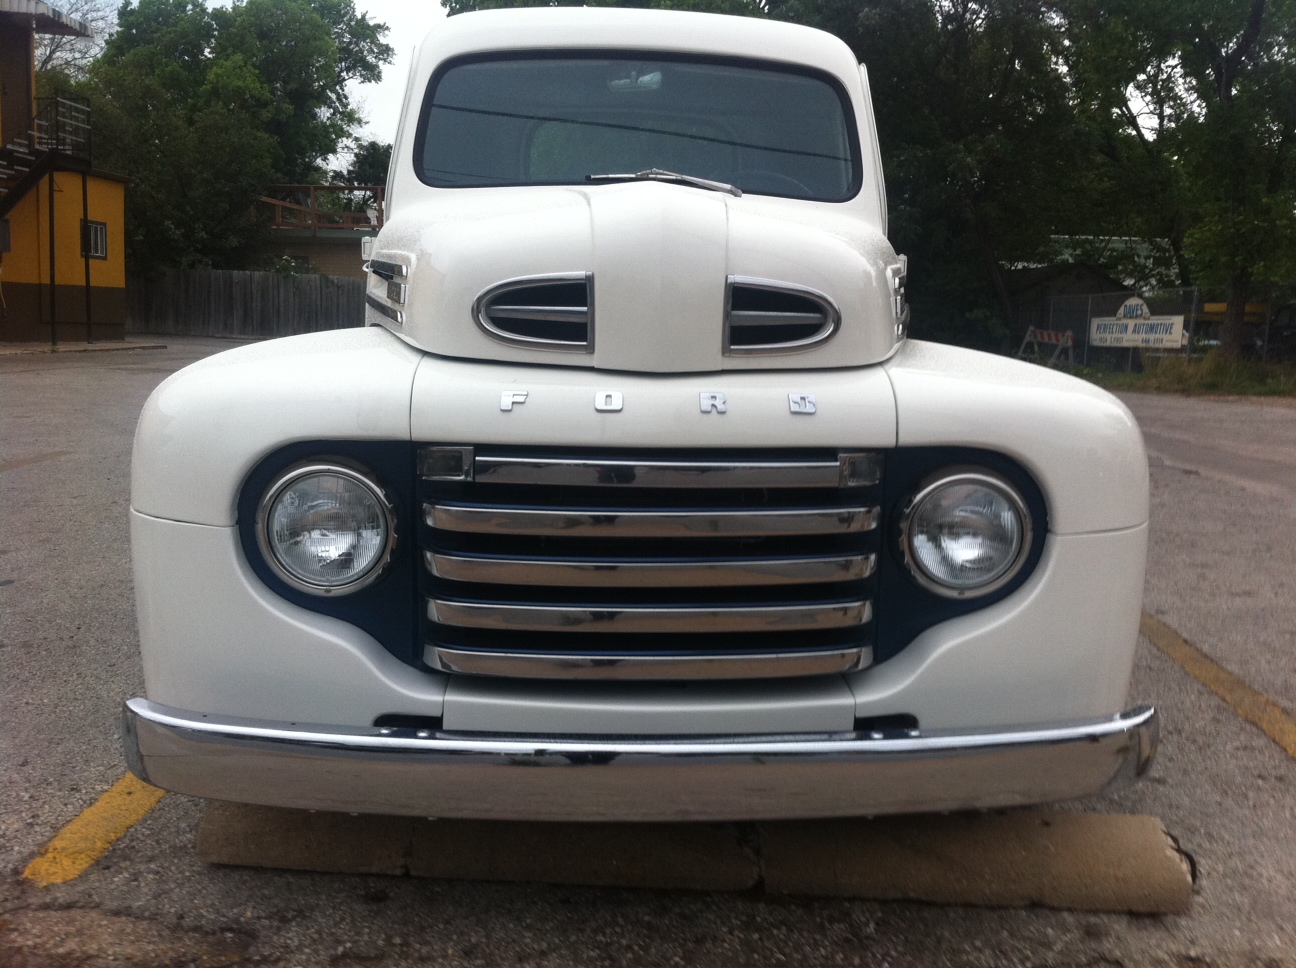 Ford trucks in austin texas #6